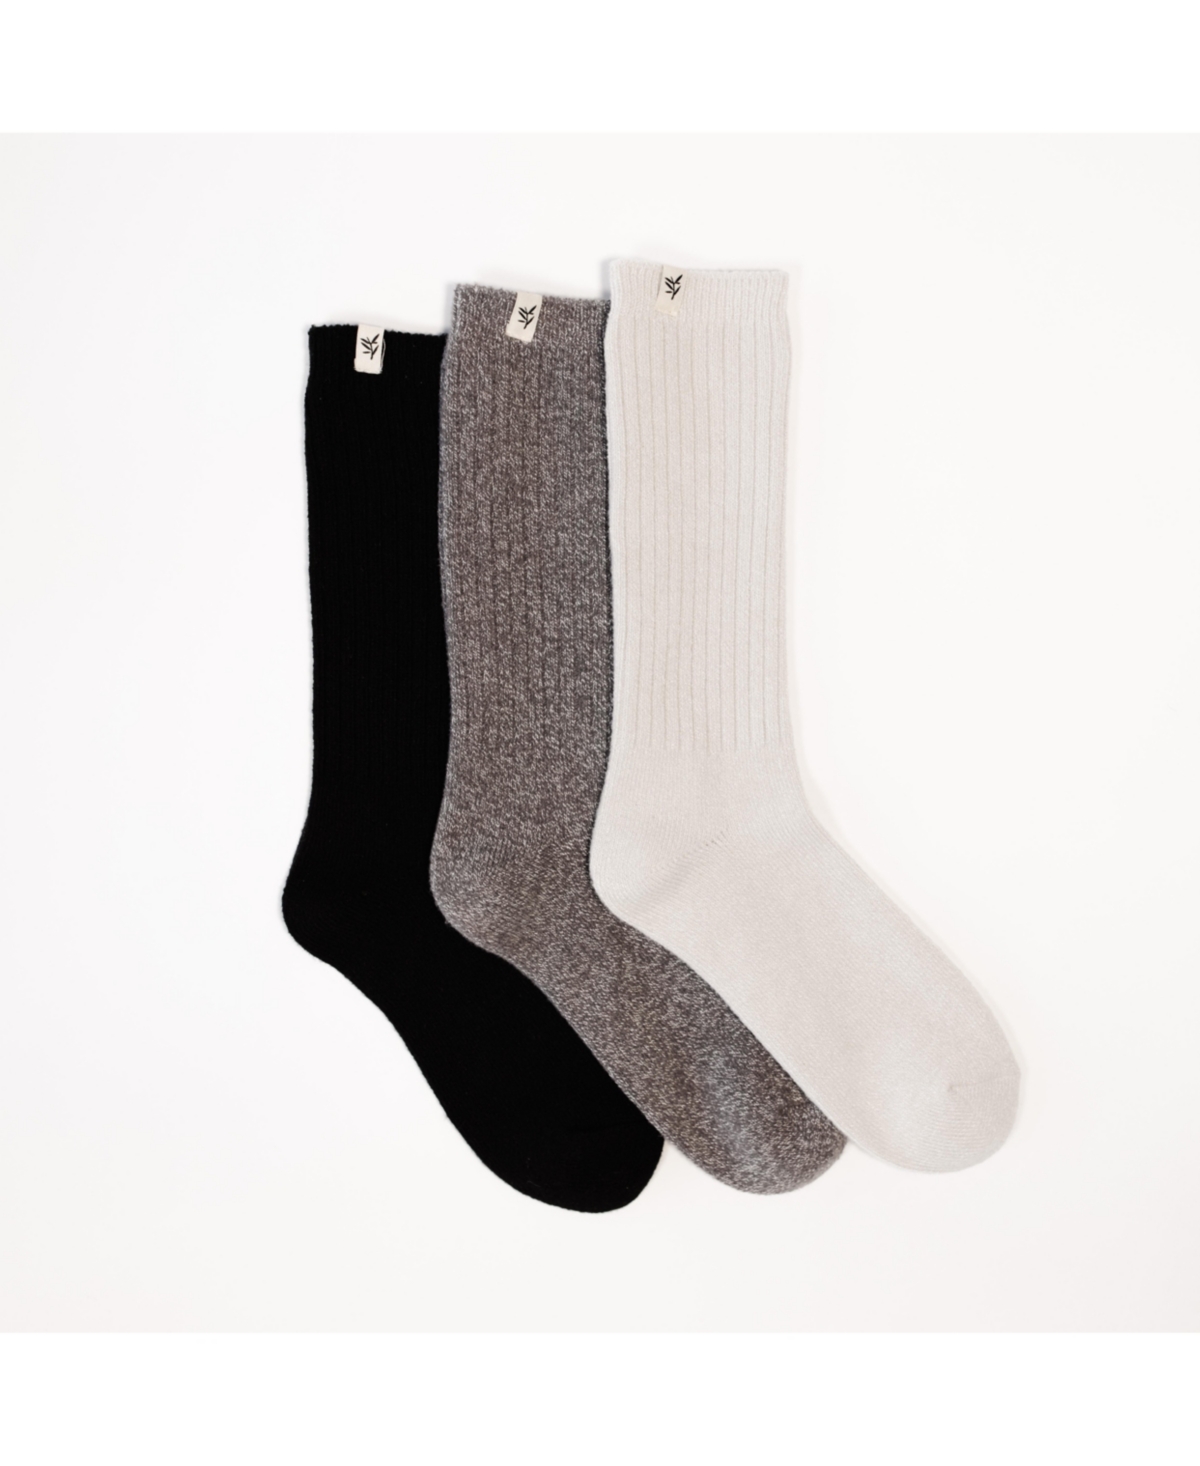 Women's h Lounge Socks for Women - Midnight sky, almond, creme